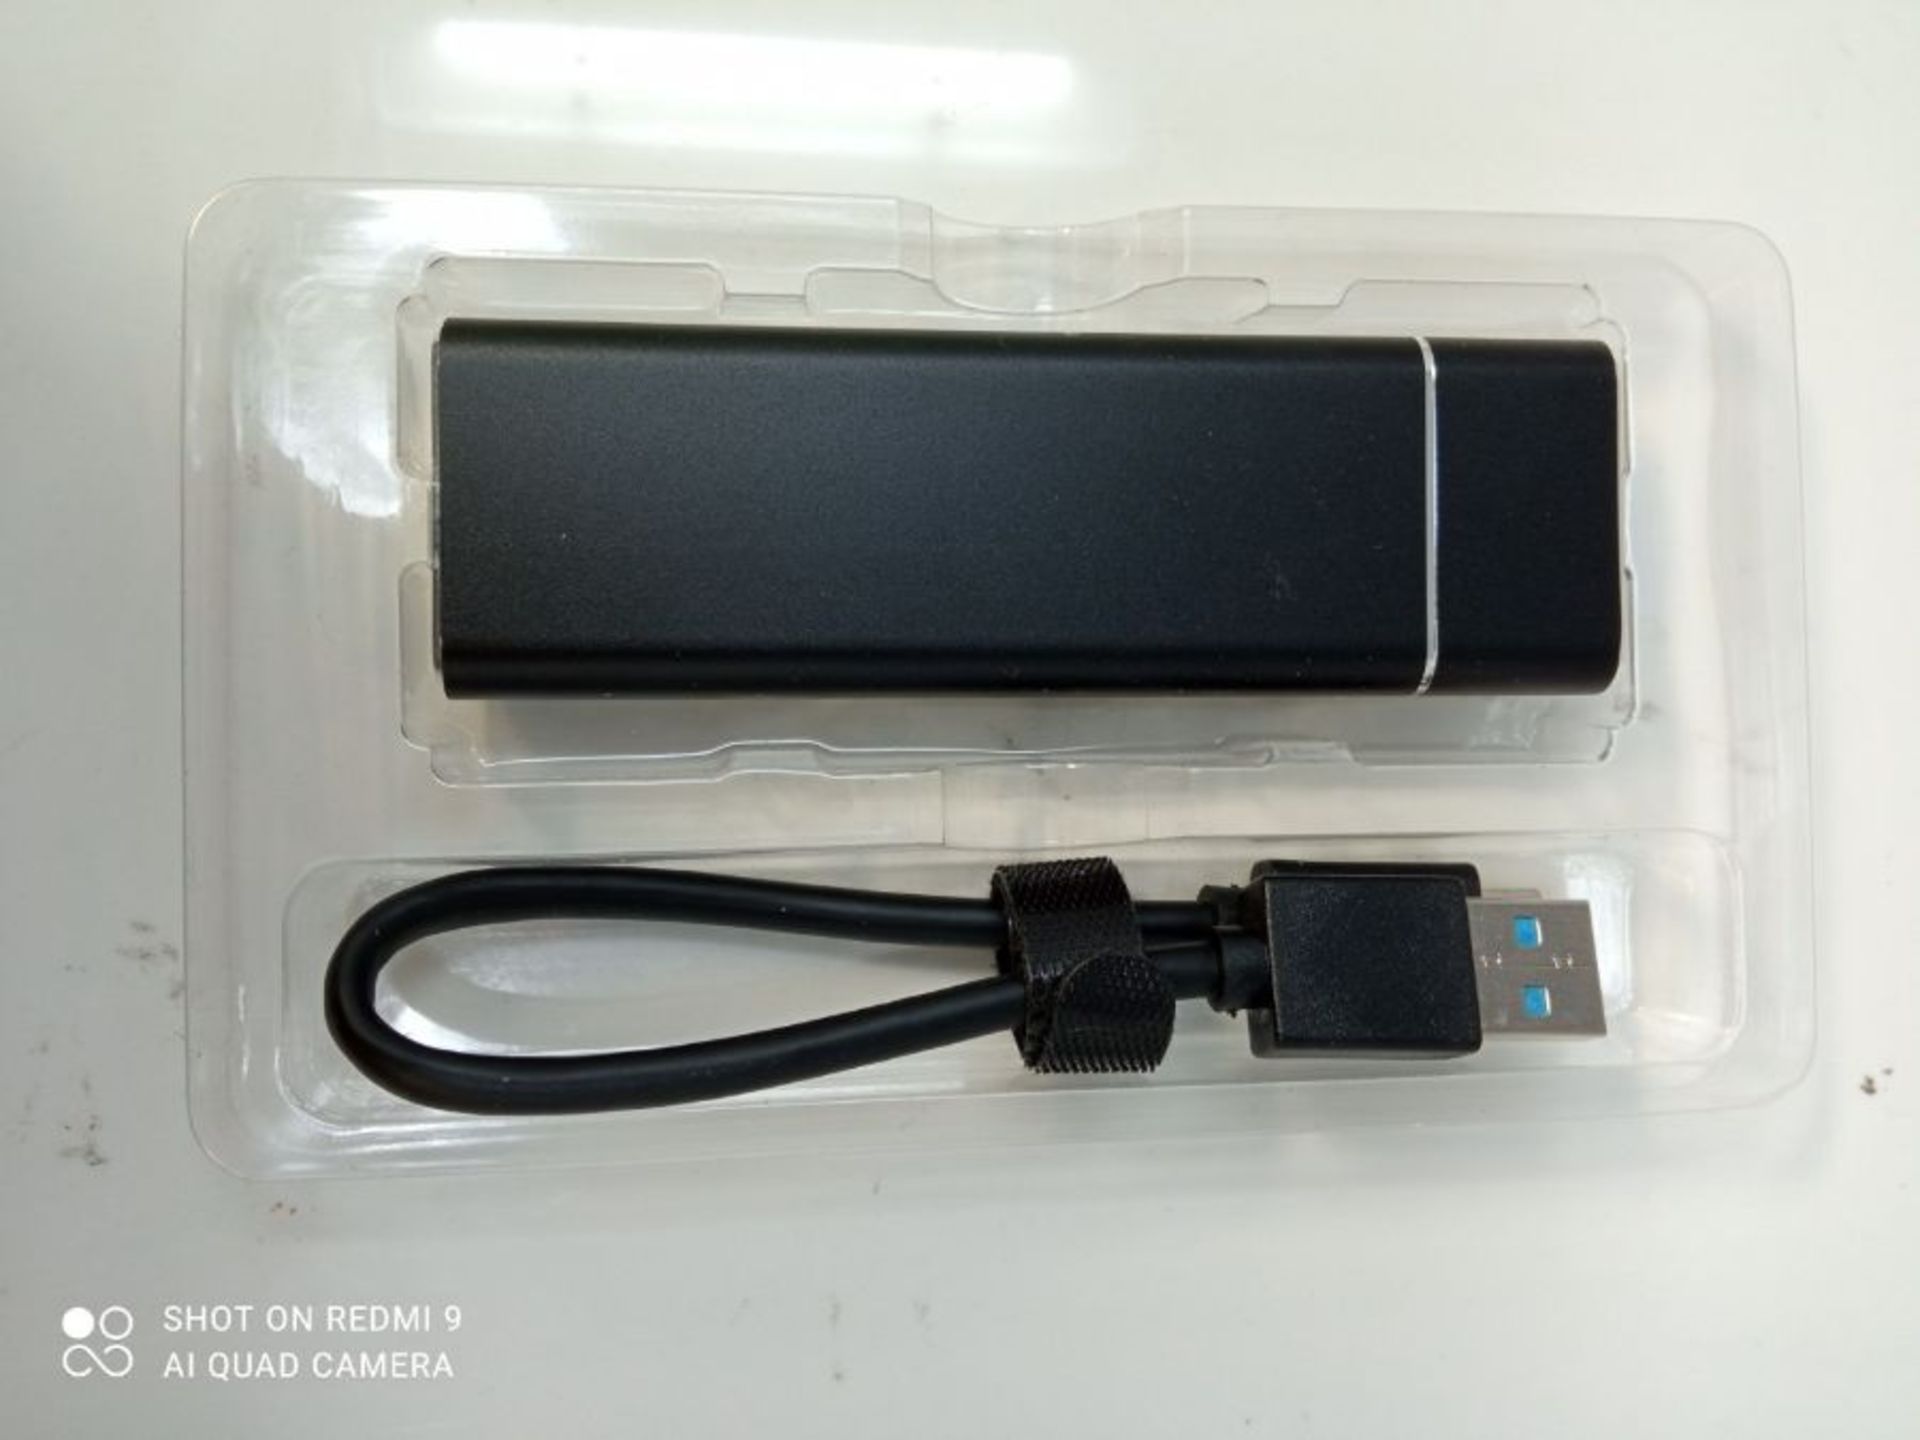 Multibao M.2 NGFF SSD SATA TO USB 3.0 External Enclosure Storage Case Adapter Aluminiu - Image 3 of 3